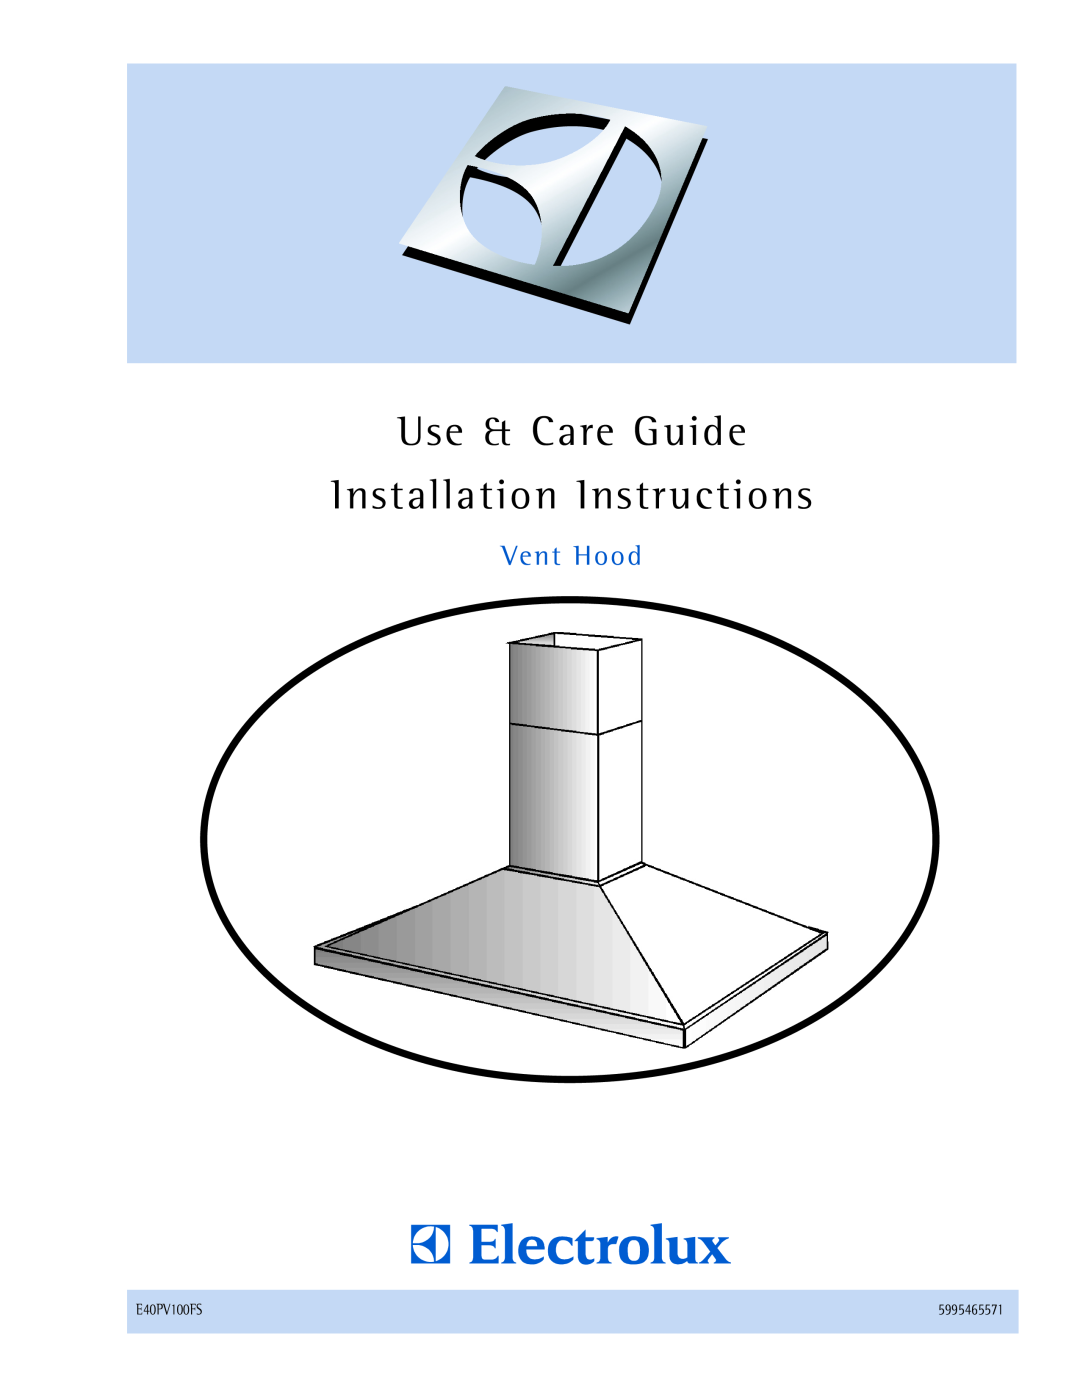 Electrolux E40PV100FS installation instructions Use & Care Guide Installation Instructions, Vent Hood, 5995465571 